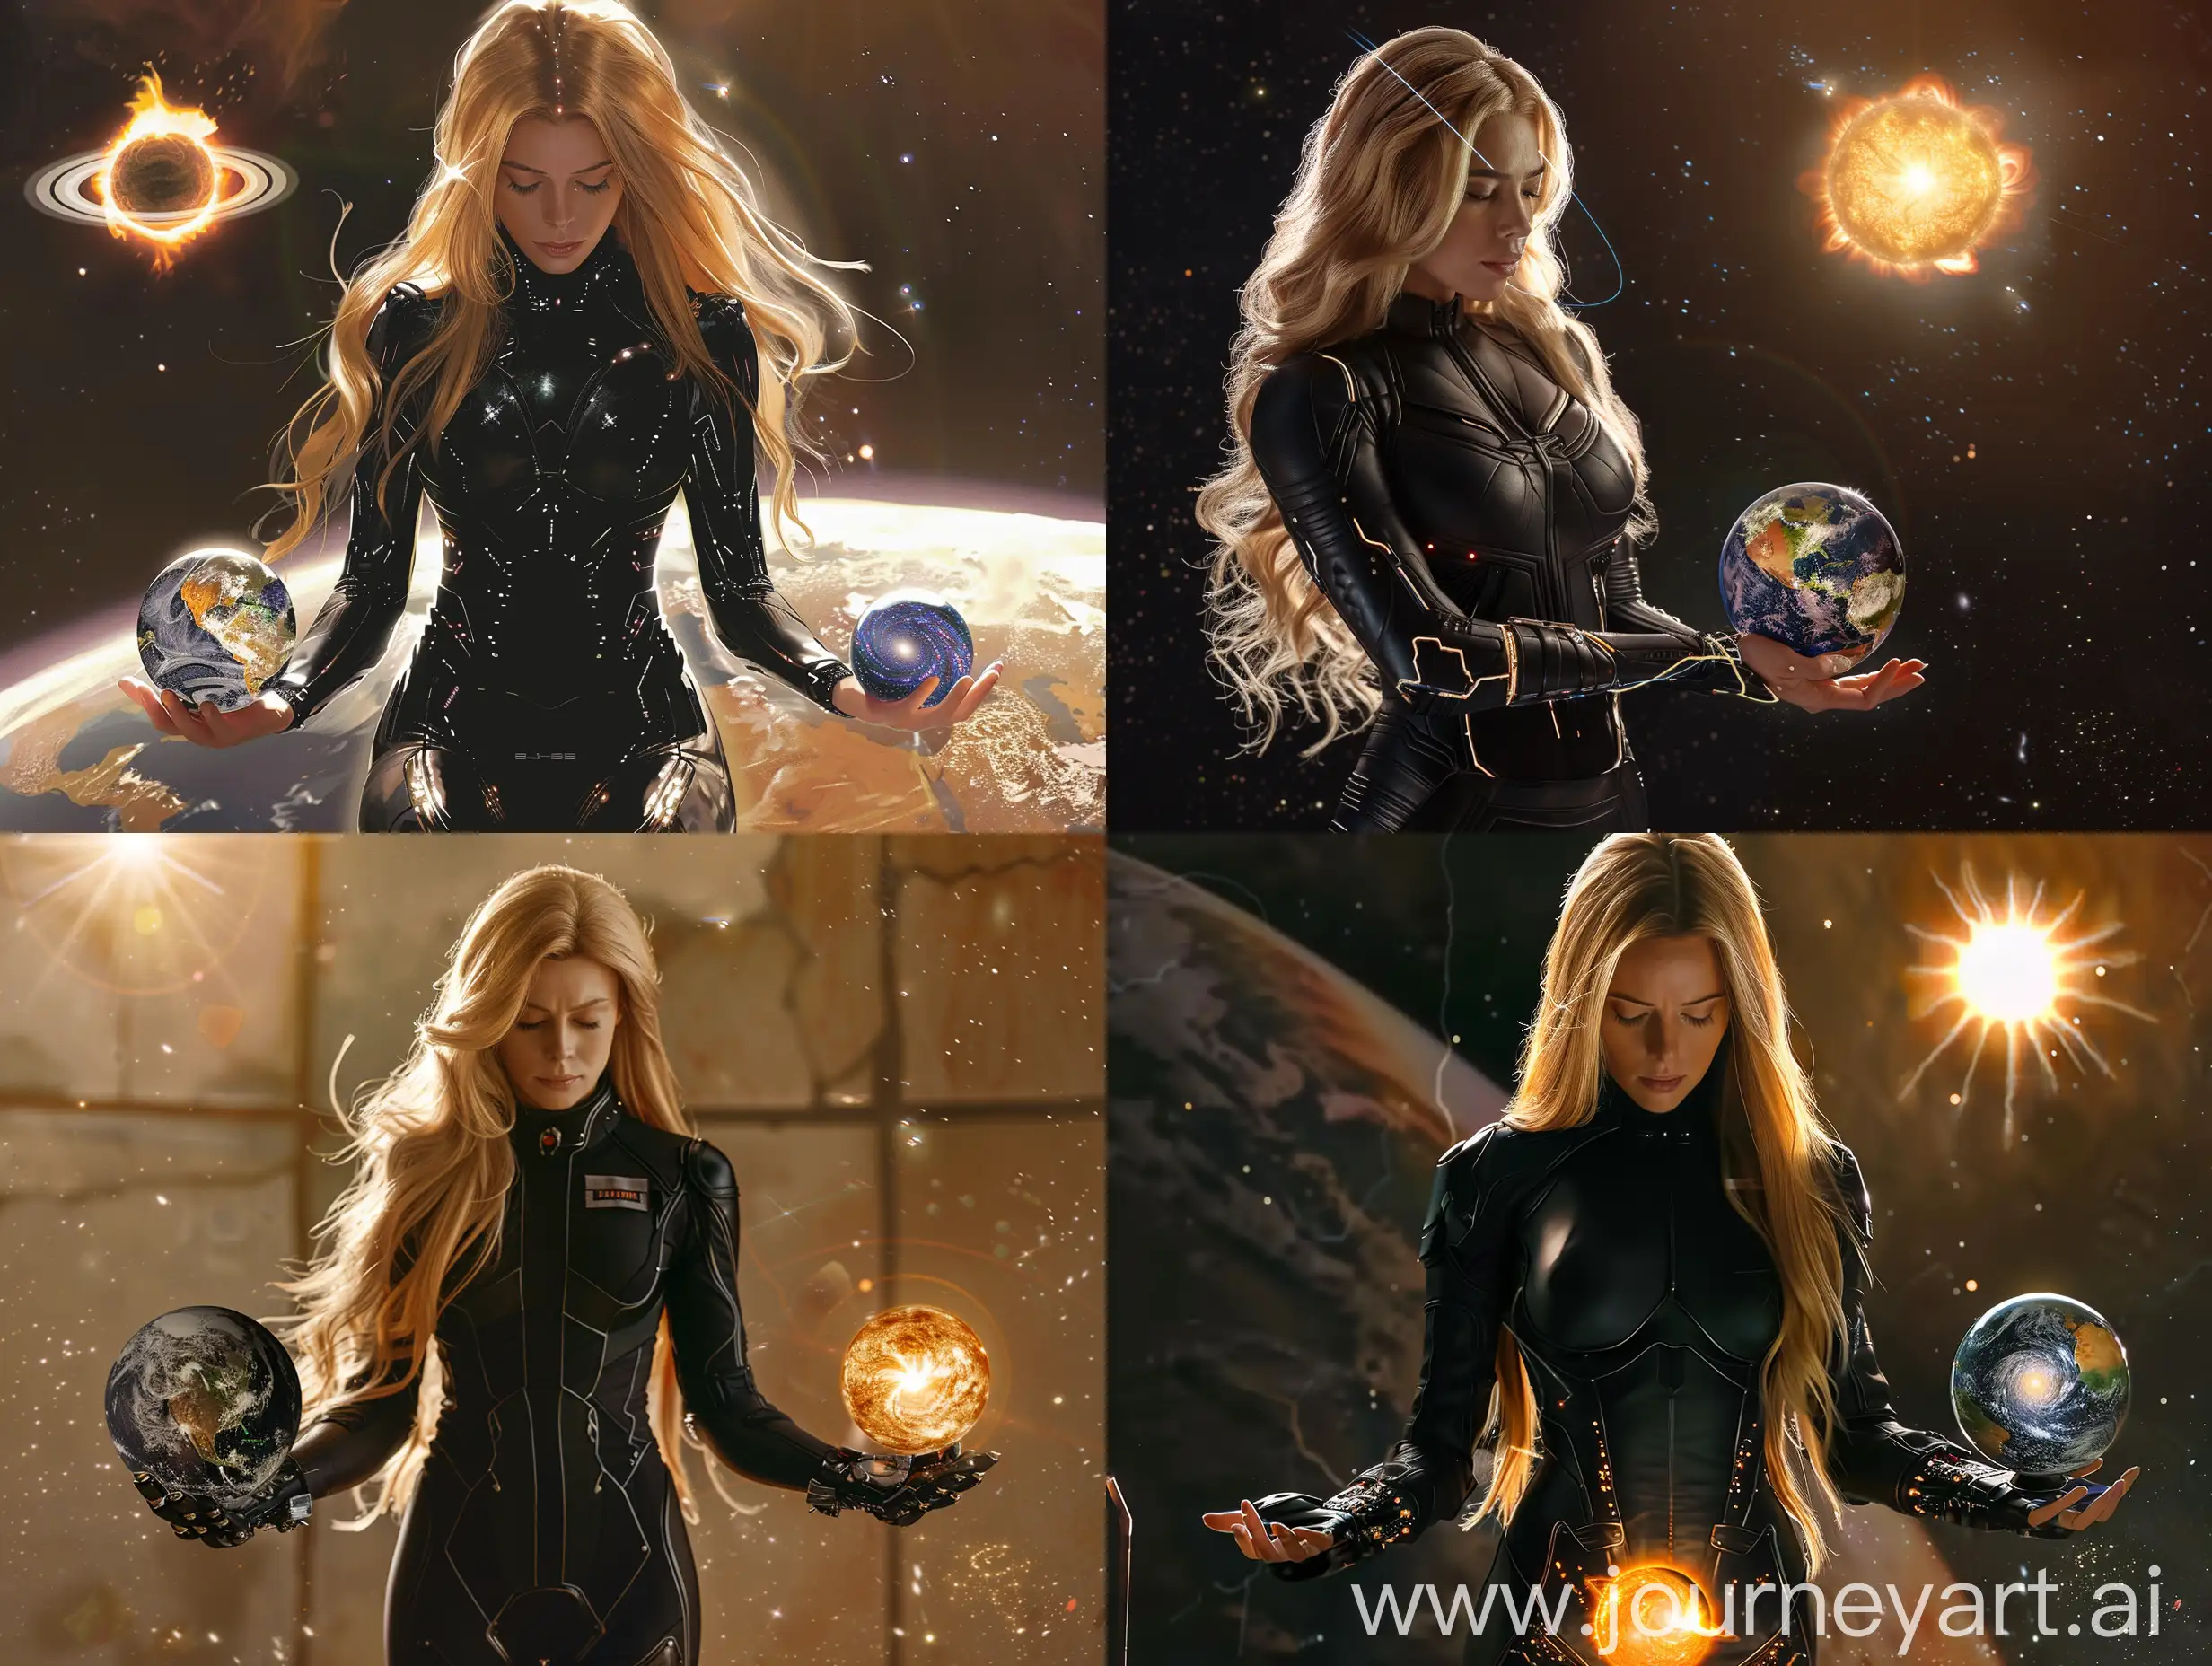 Futuristic-Goddess-Scarlett-Johansson-Embraces-the-Cosmos-in-Cybernetic-Splendor